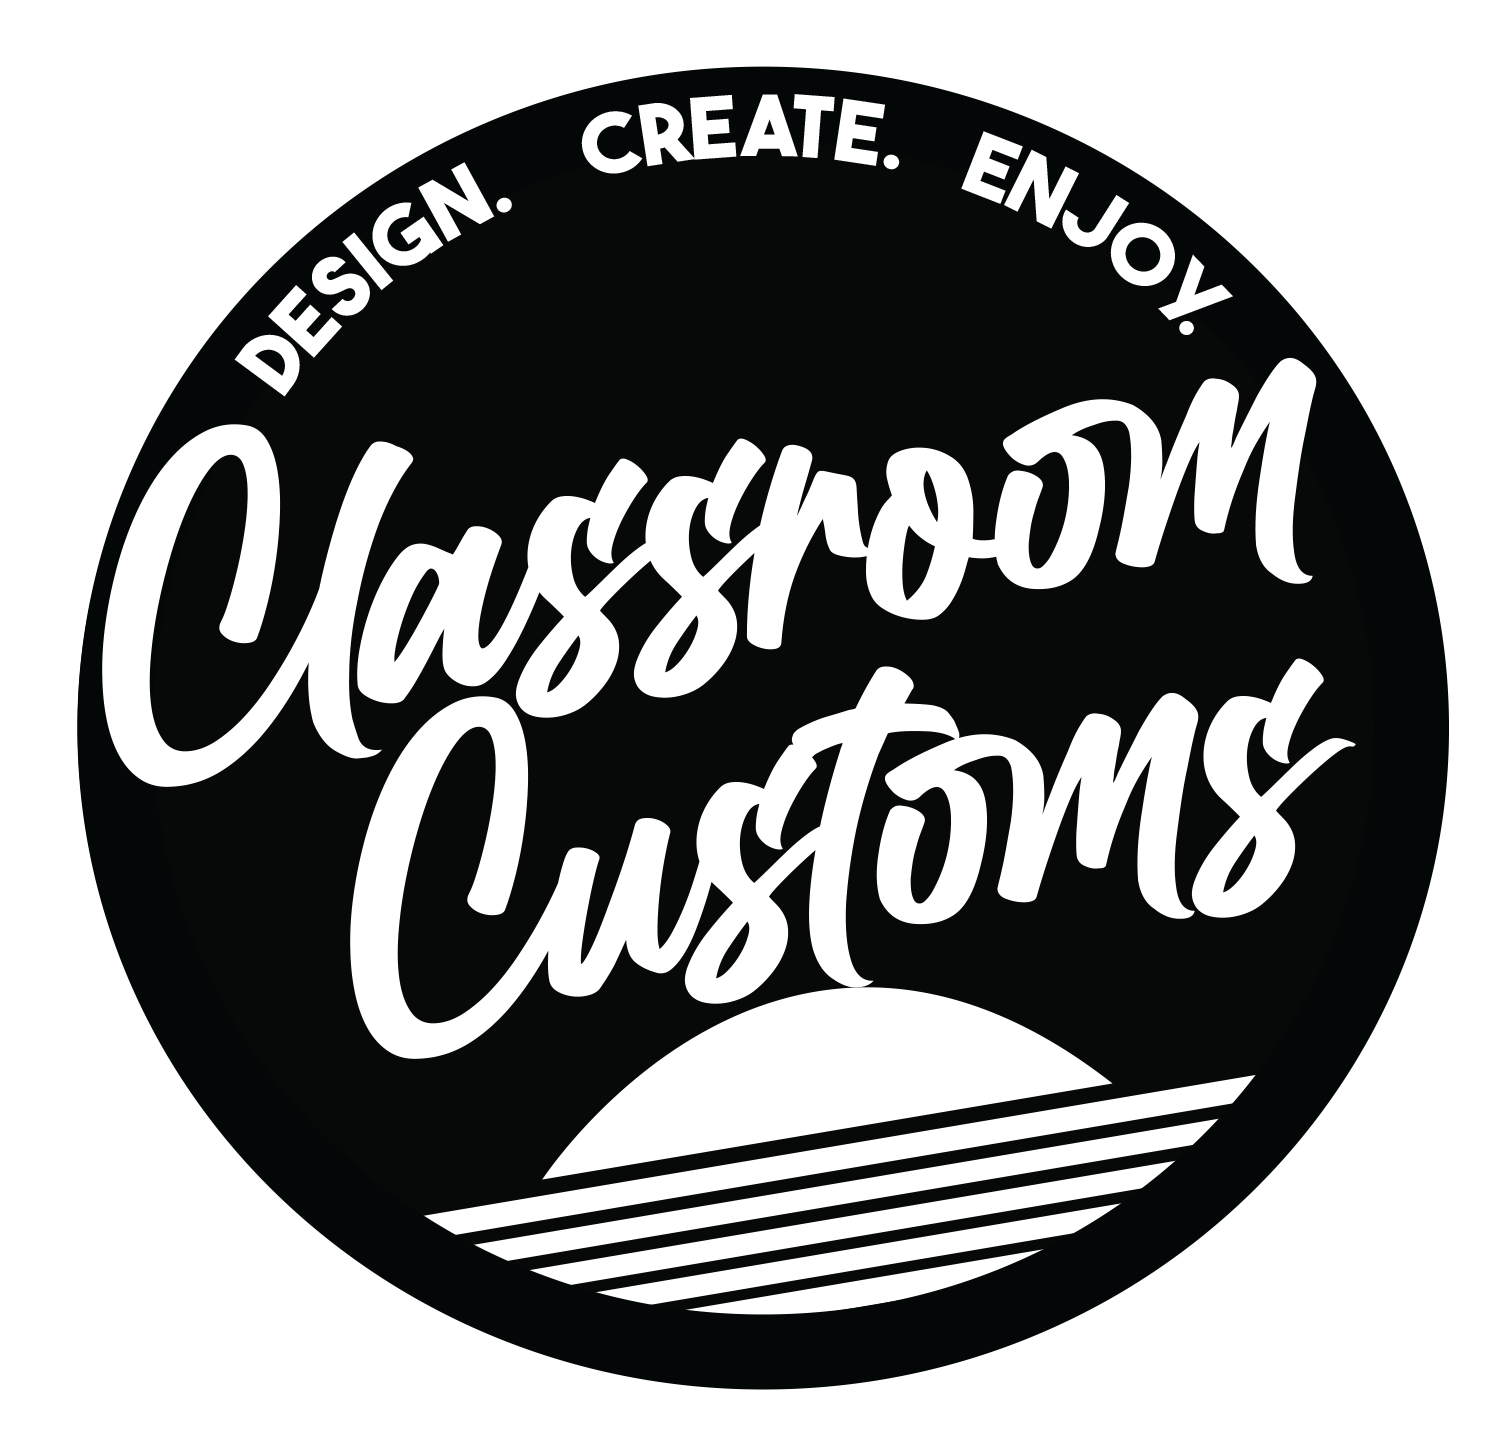 Classroom Customs Logo